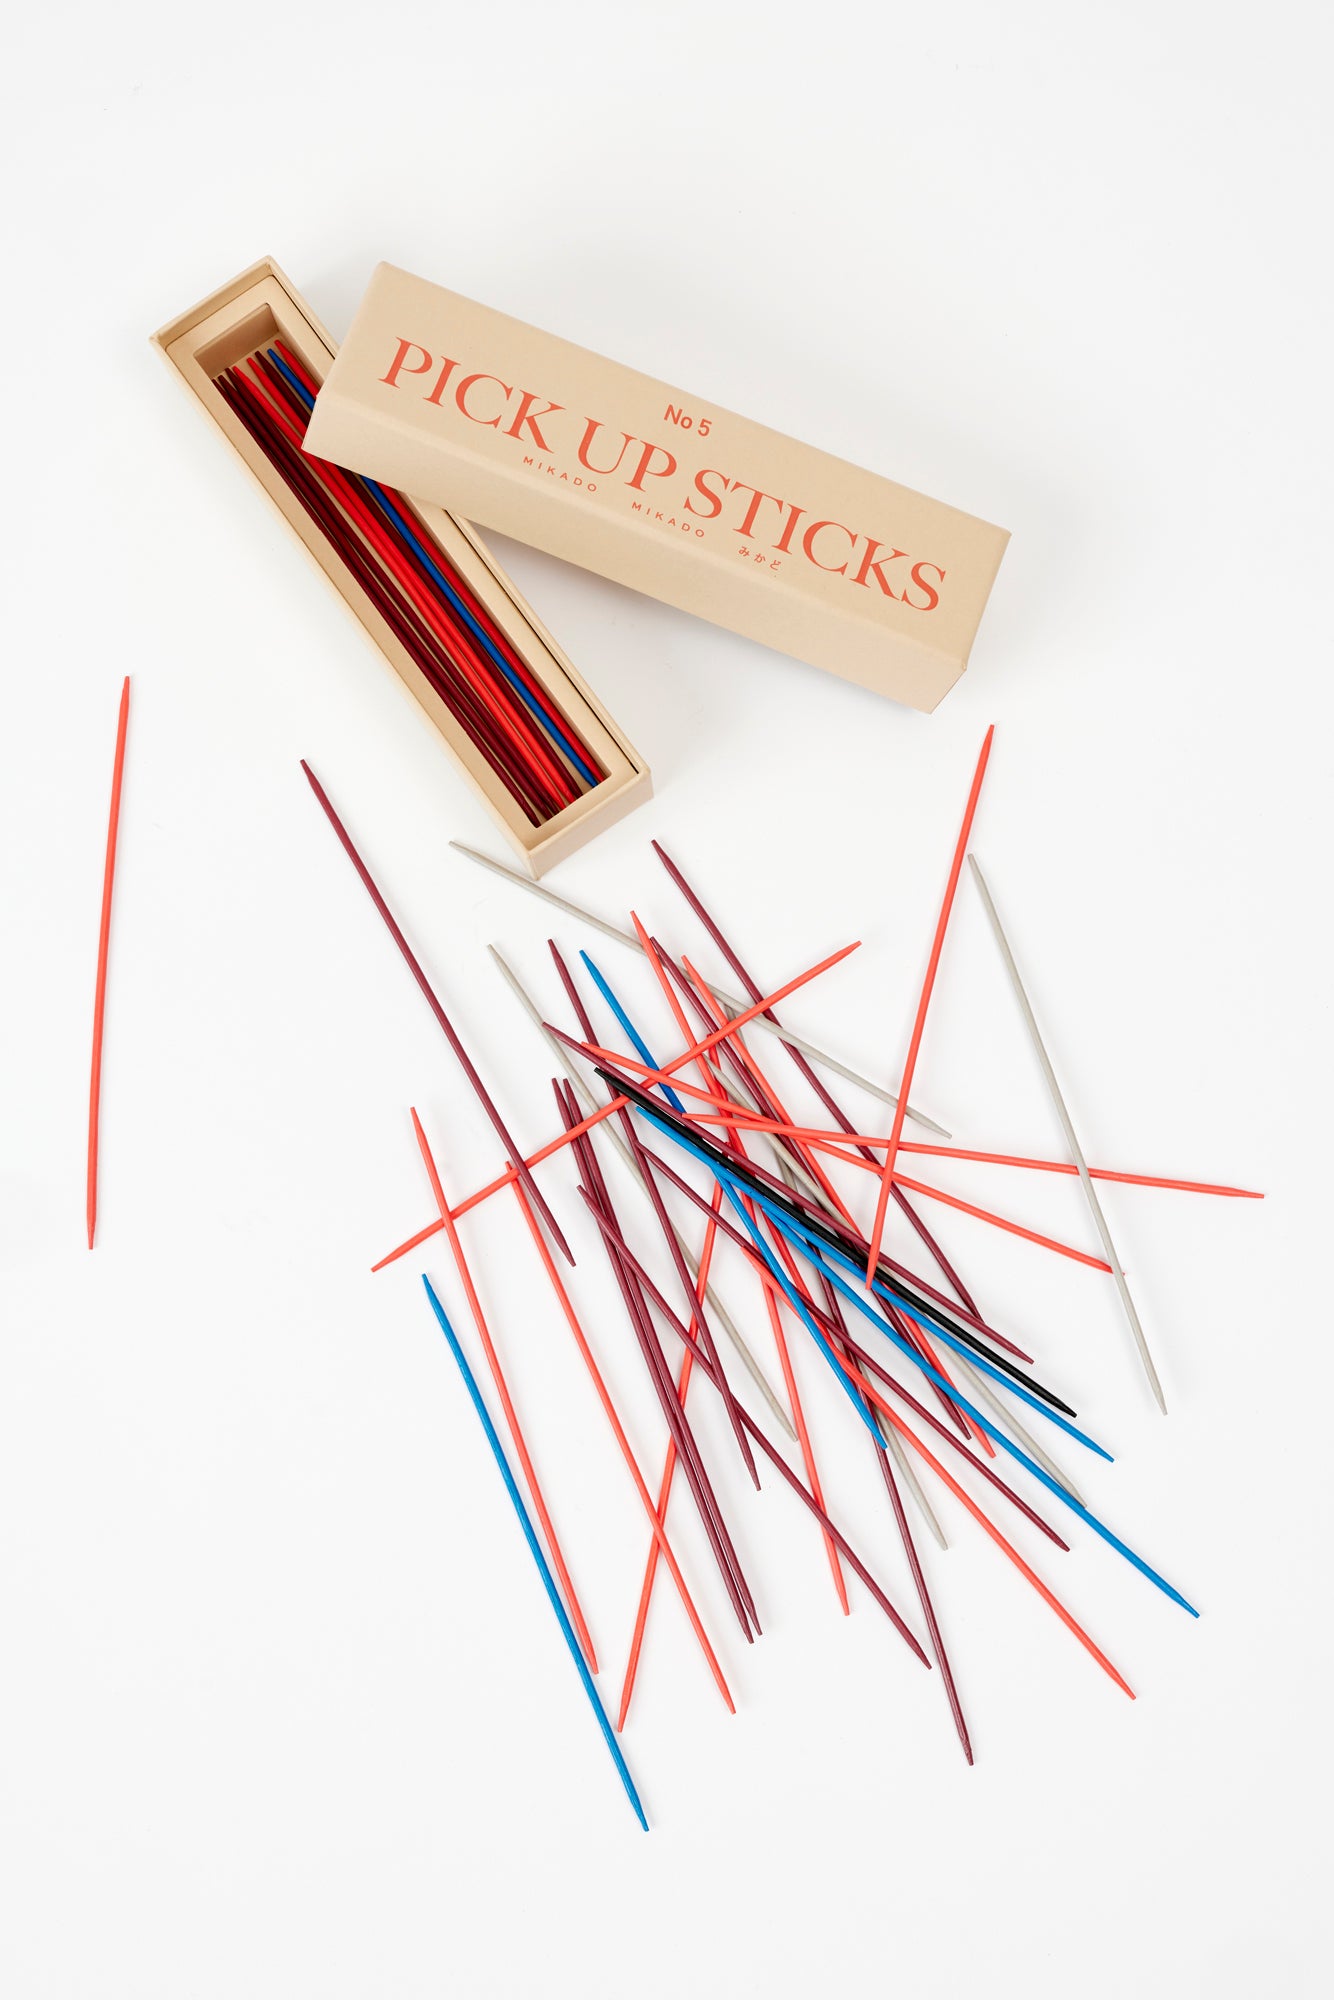 Mikado - Pick-up sticks game